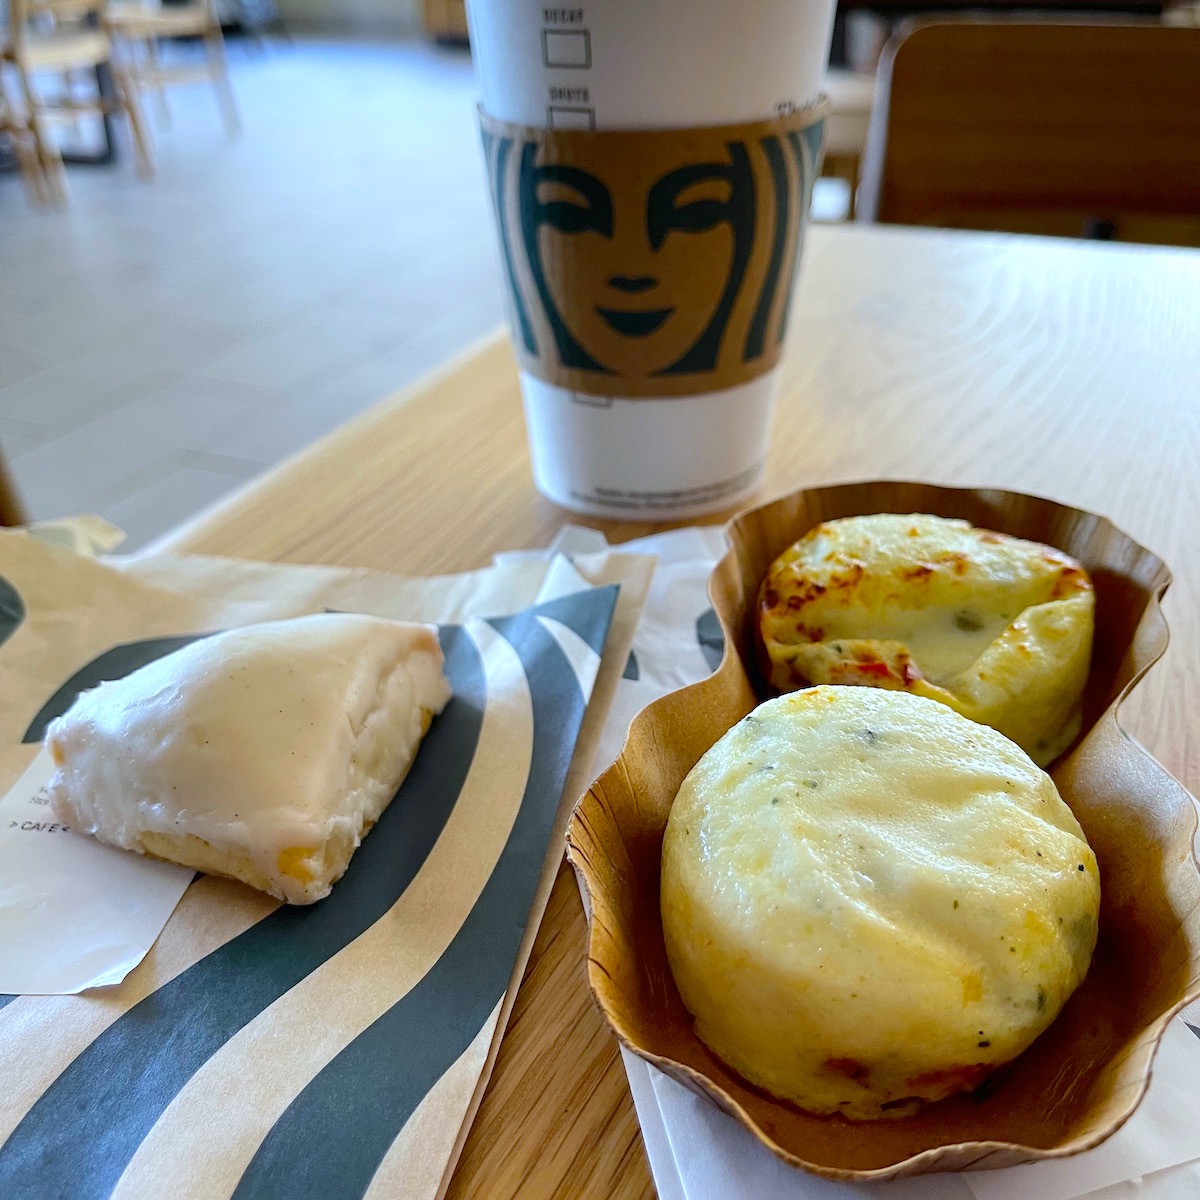 Starbucks Coffee, Vanilla Scone and Sous Vide Egg Bites